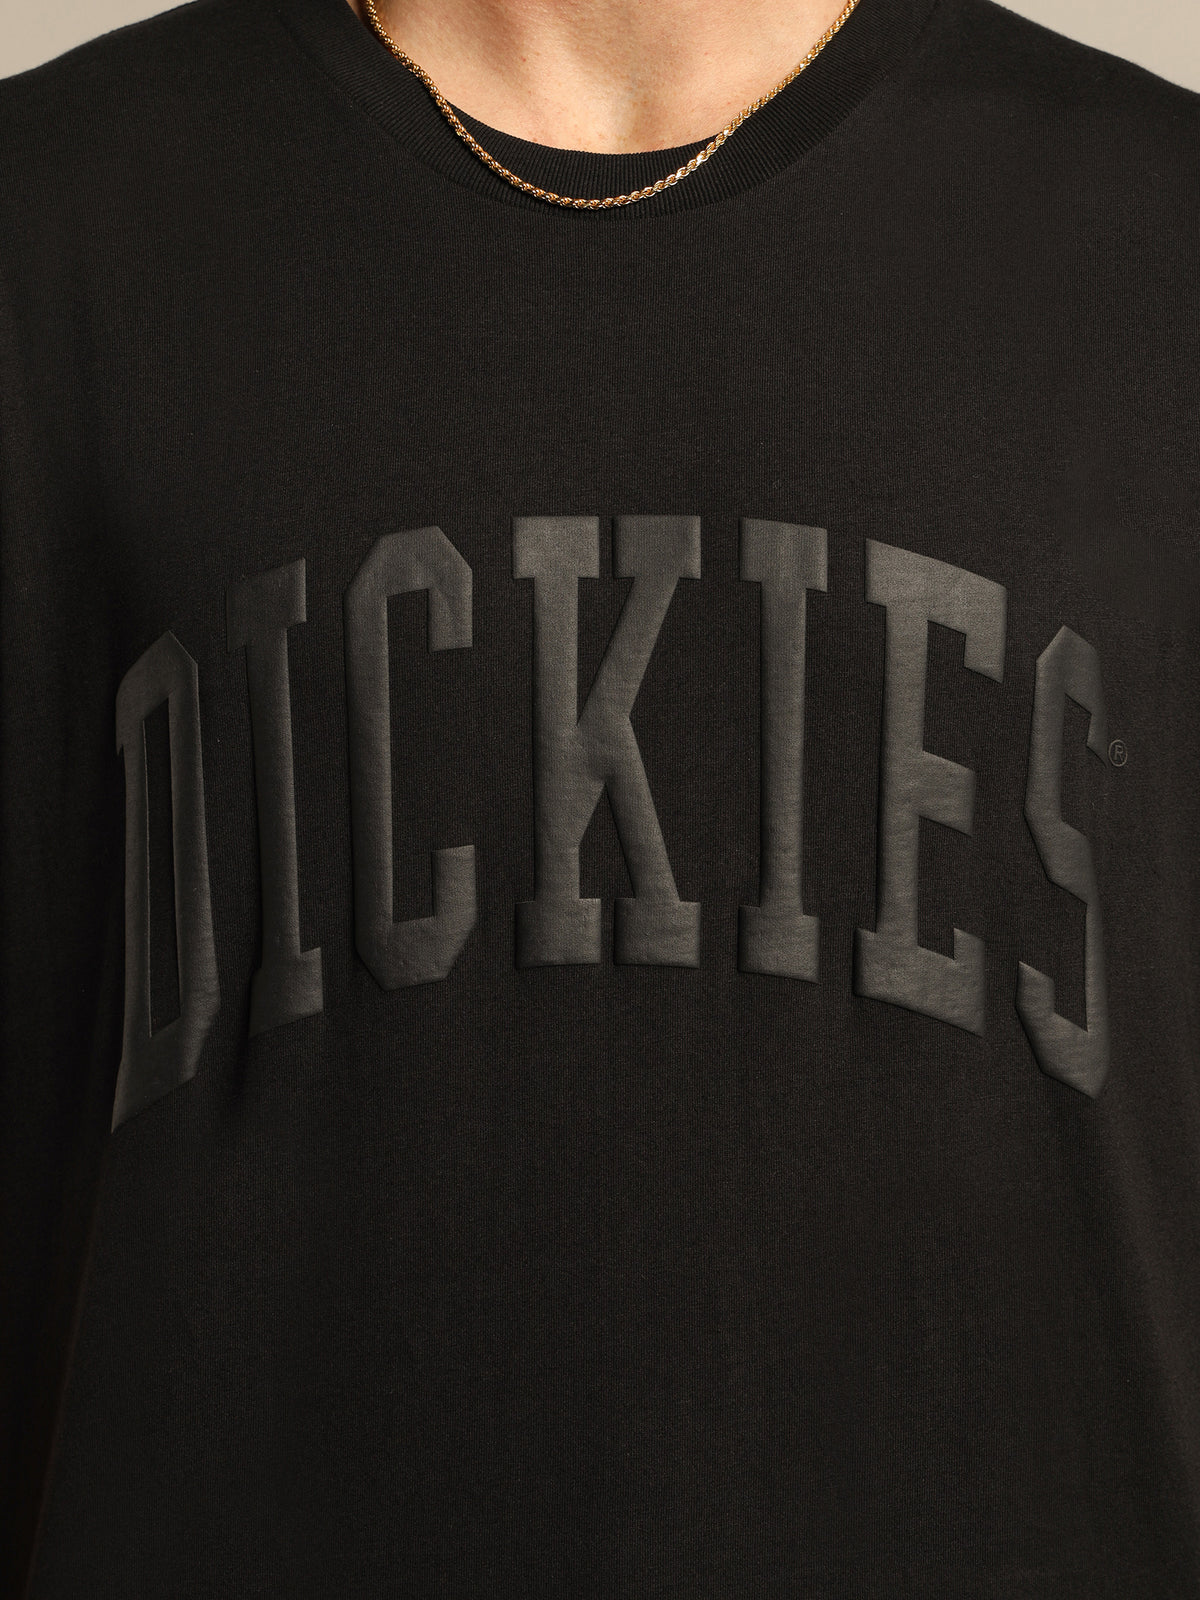 Lockhart T-Shirt in Black